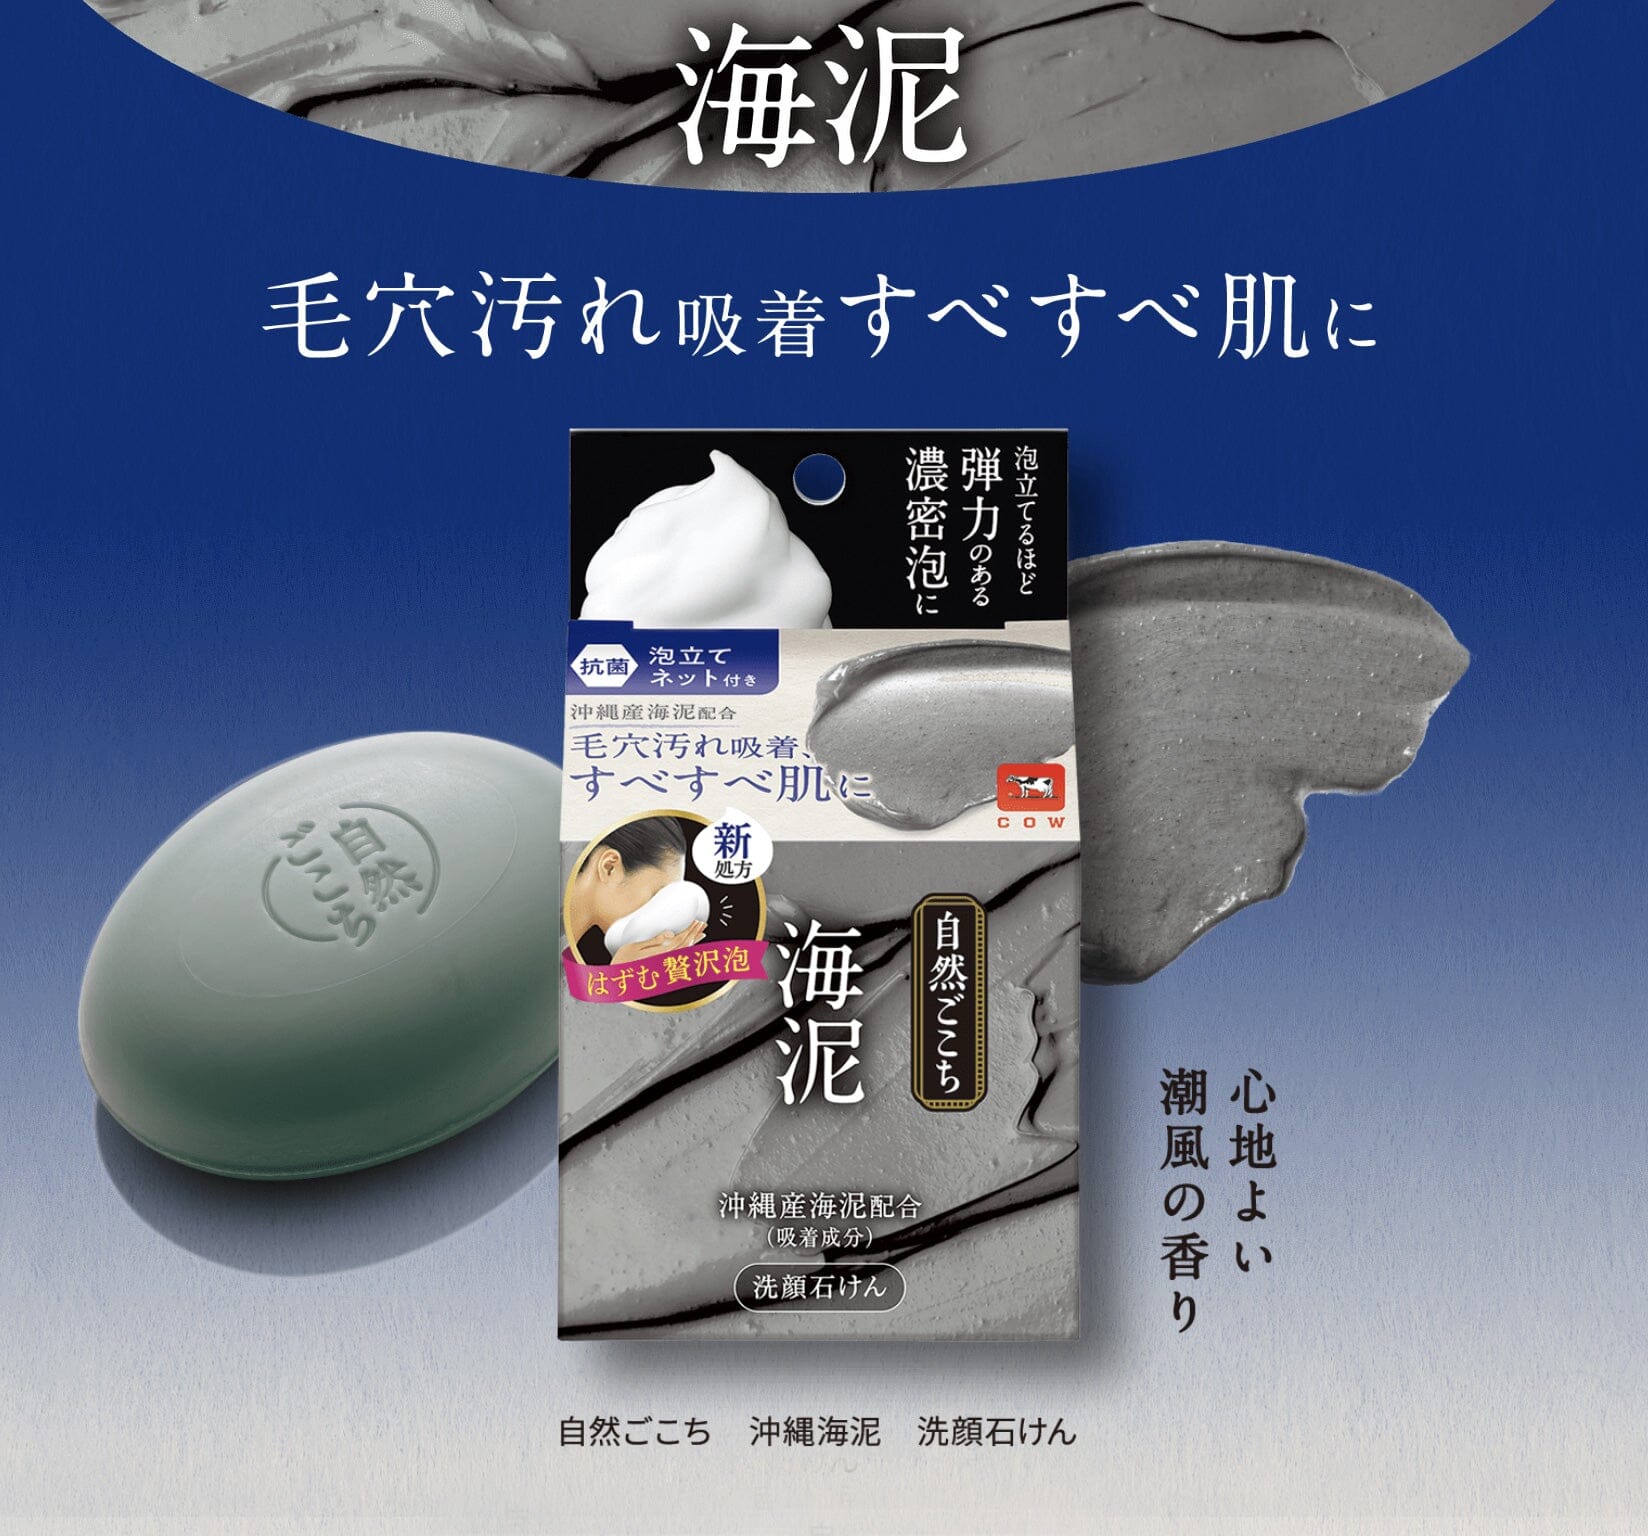 Cow Brand Soap Natural Face Wash Soap Okinawa Sea Clay